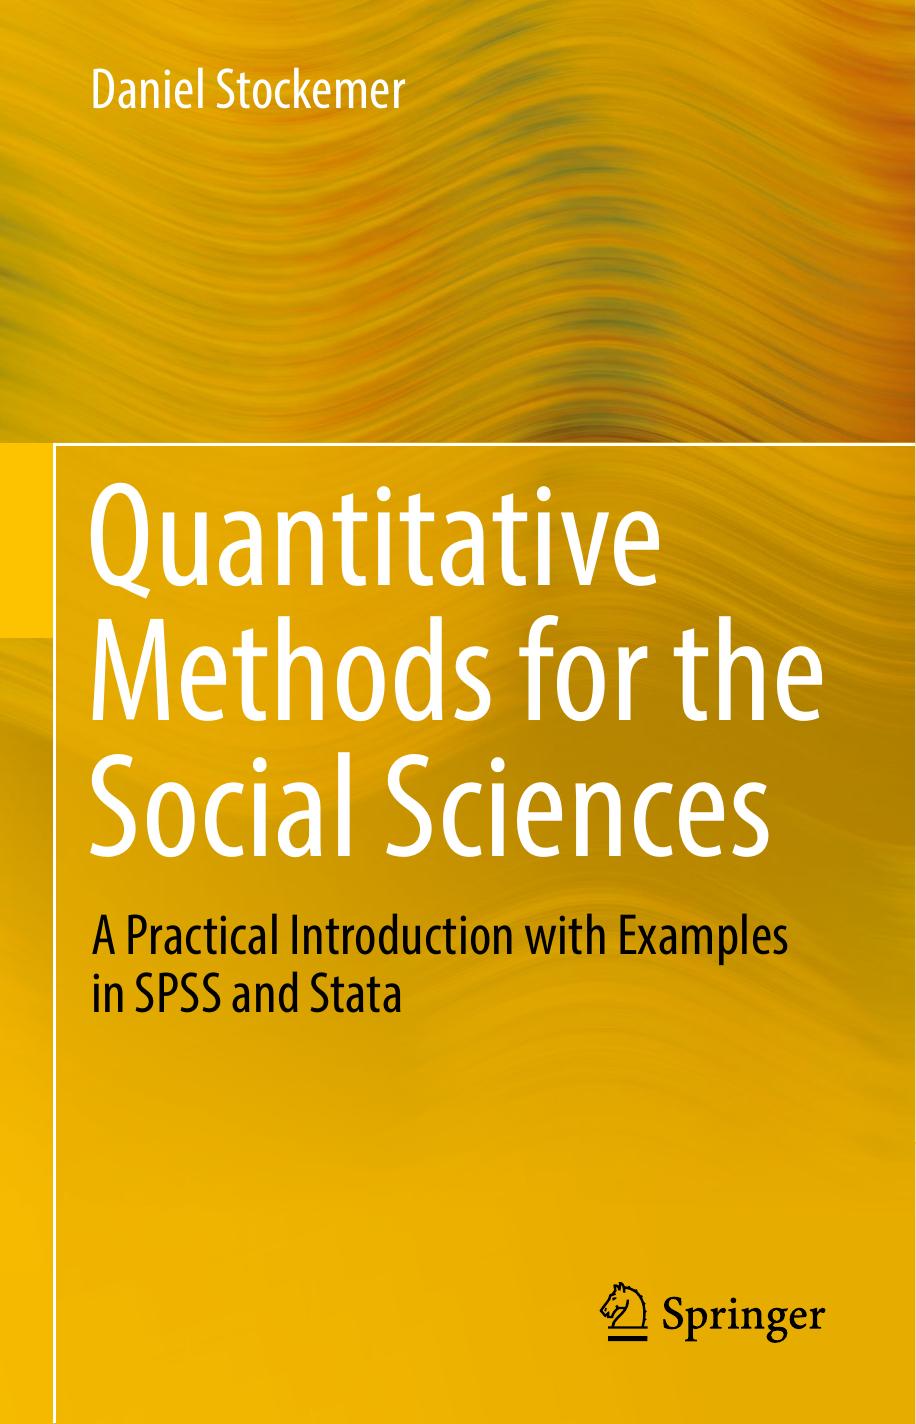 Quantitative Methods for the Social Sciences 2019